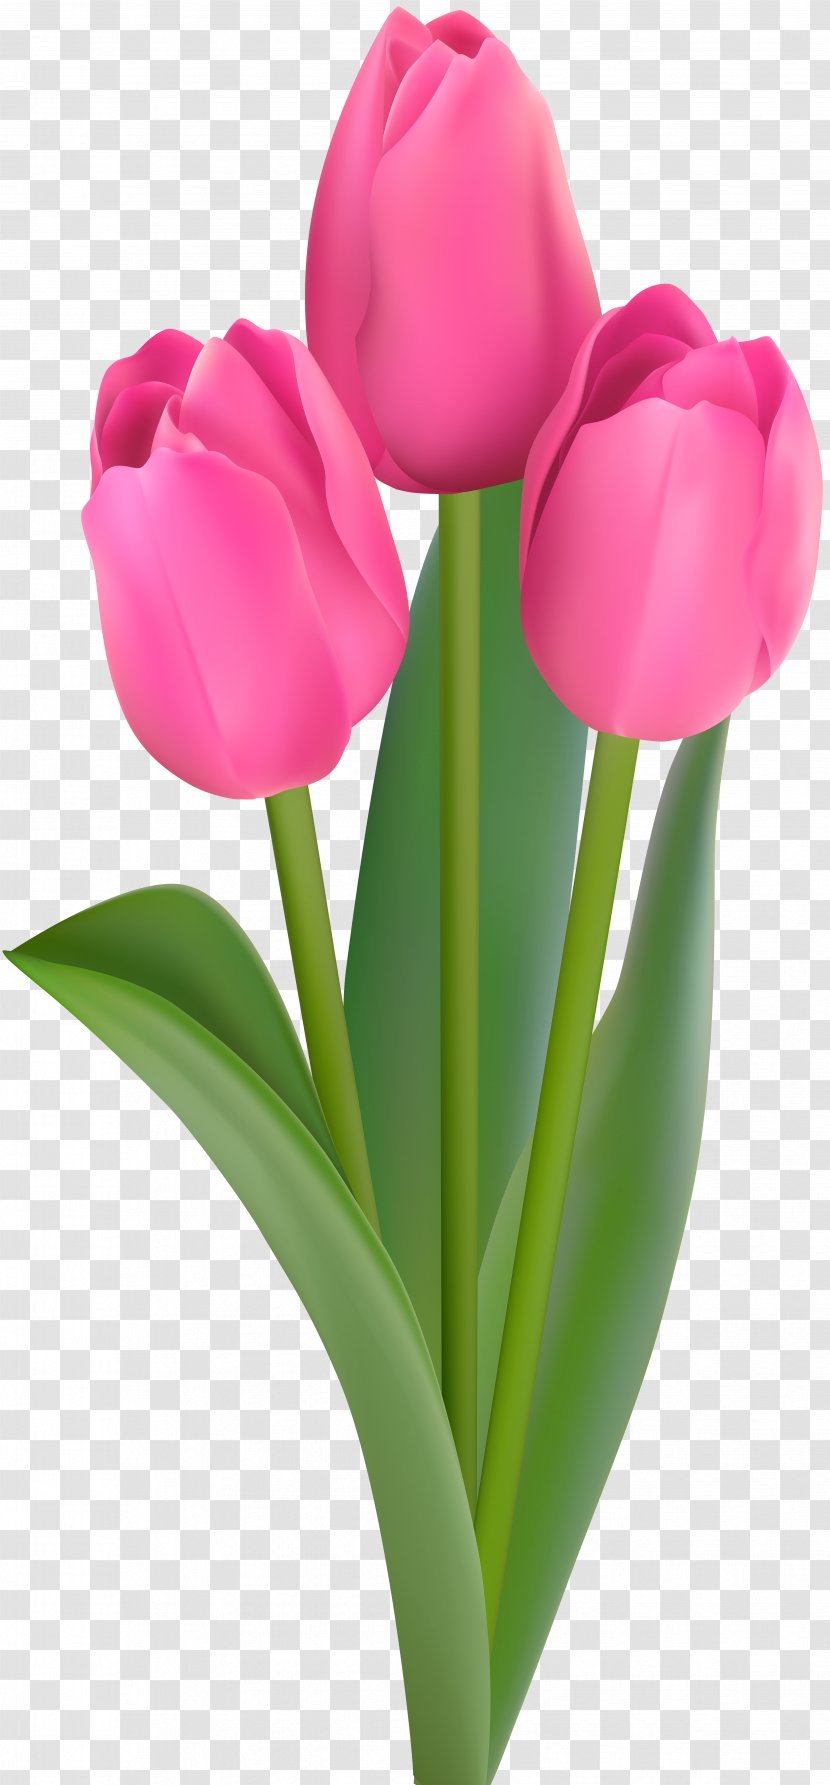 Tulip Clip Art - Plant Stem - Tulips Transparent PNG